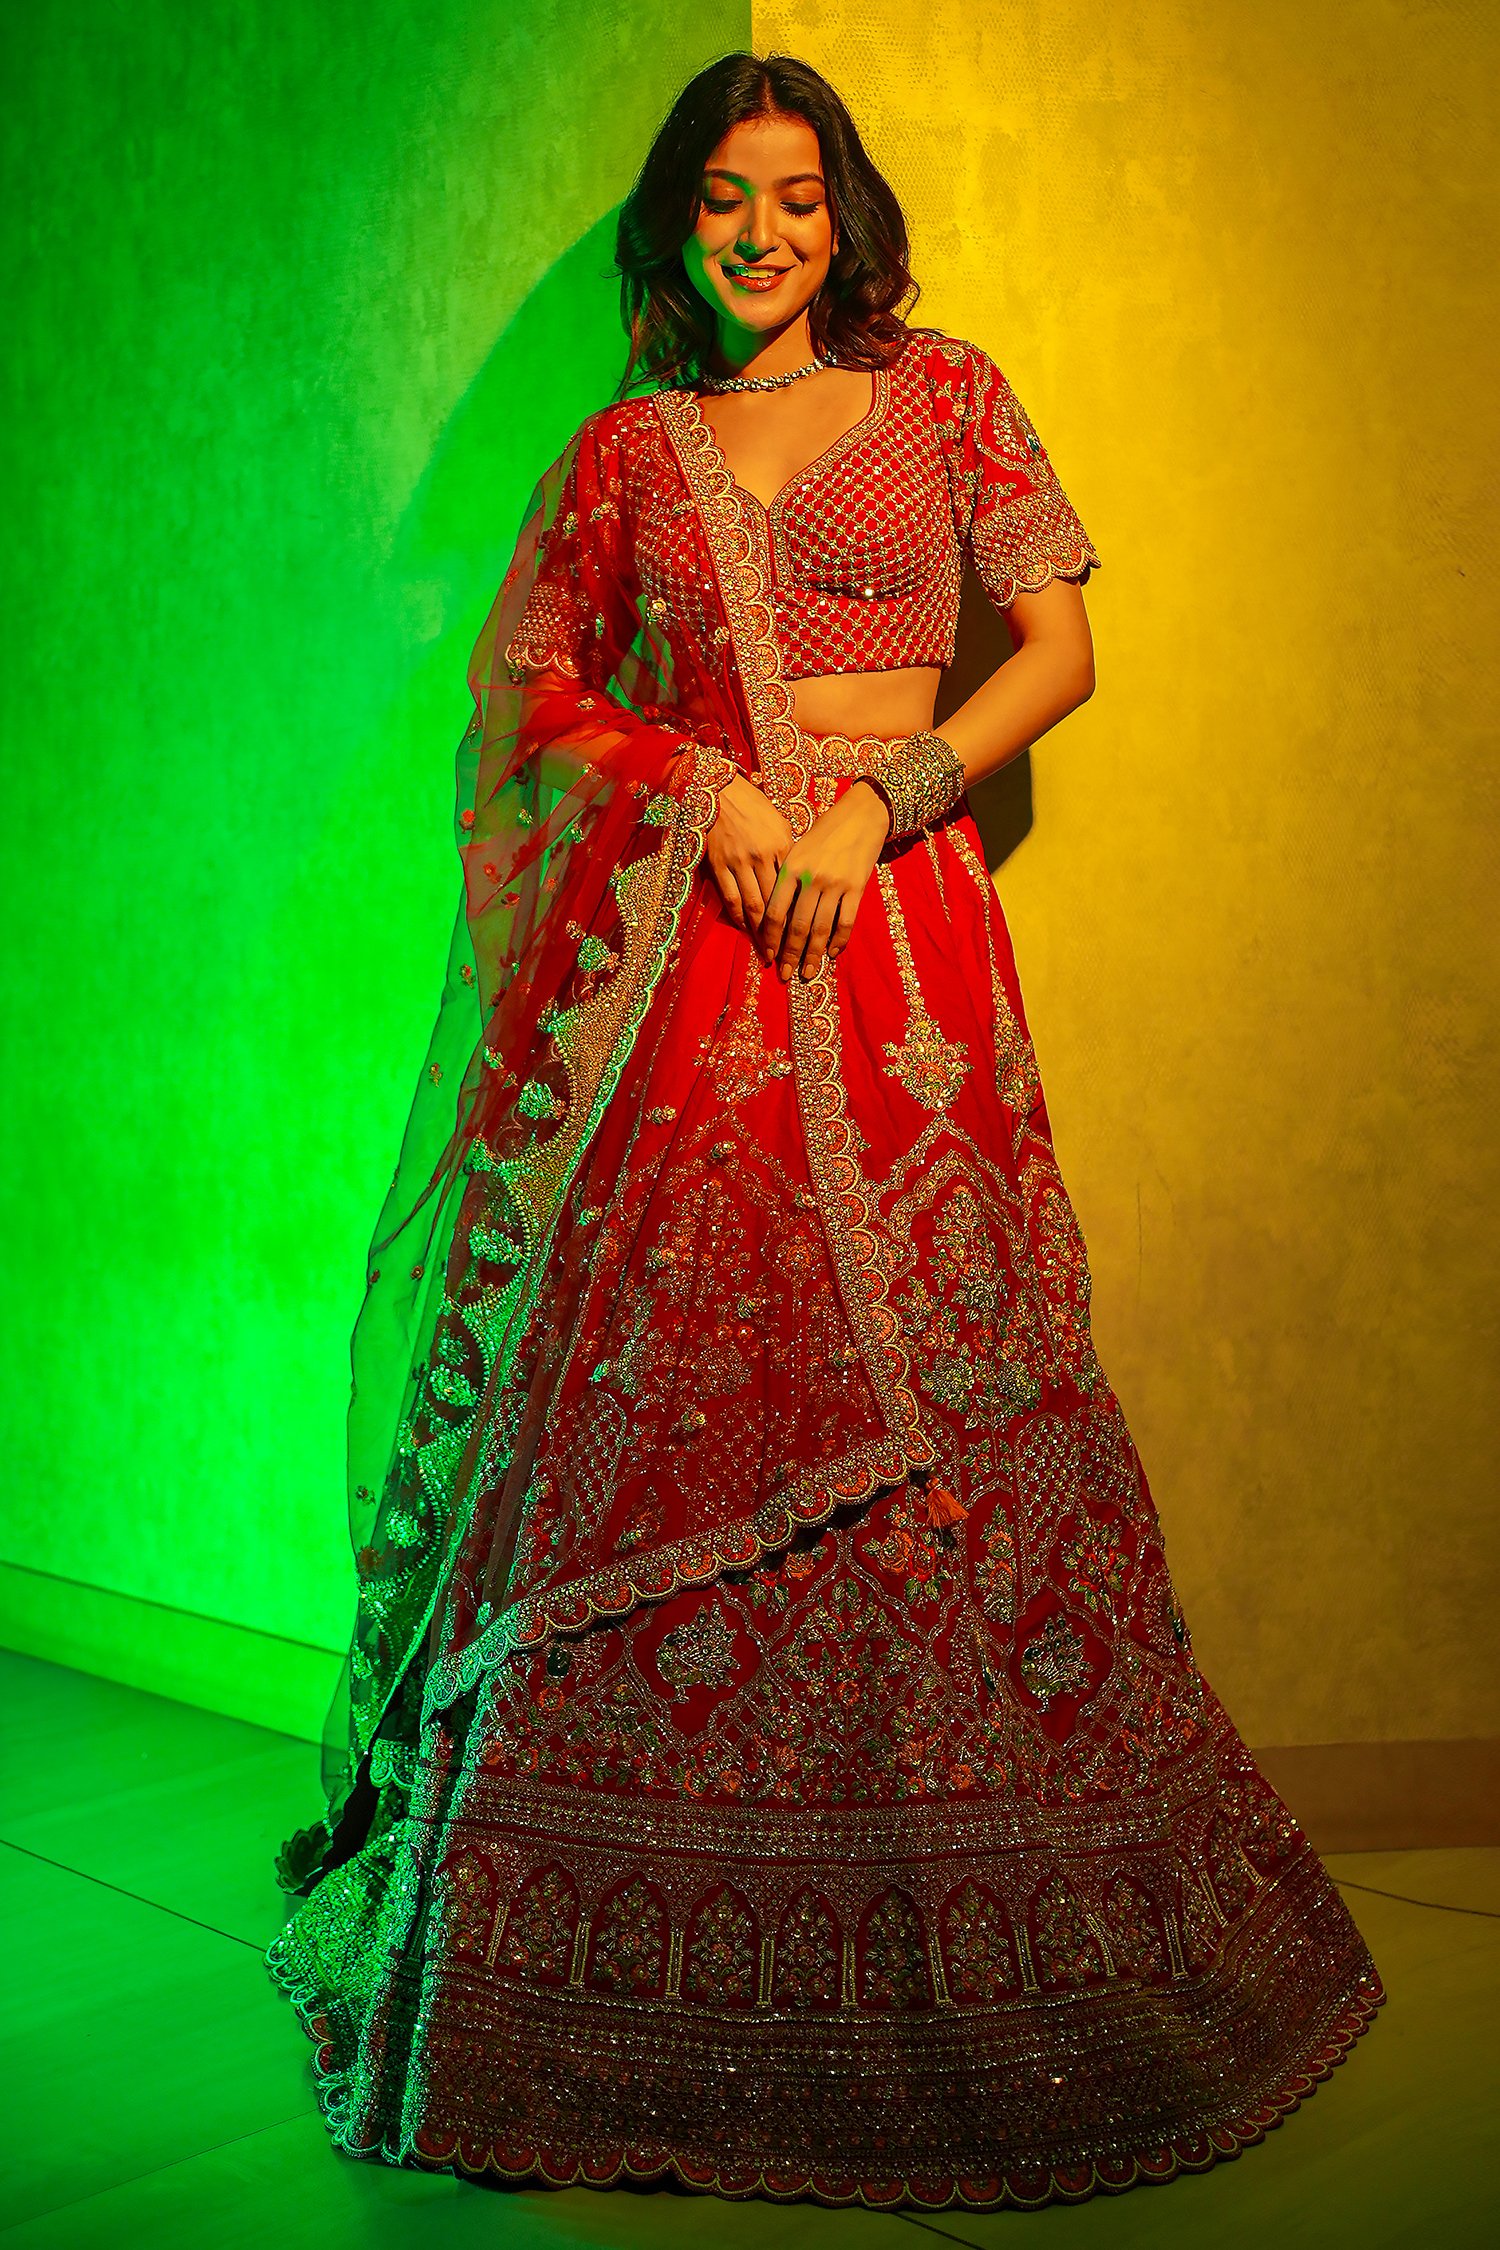 Homepage | Indian bride dresses, Indian bride, Bollywood wedding